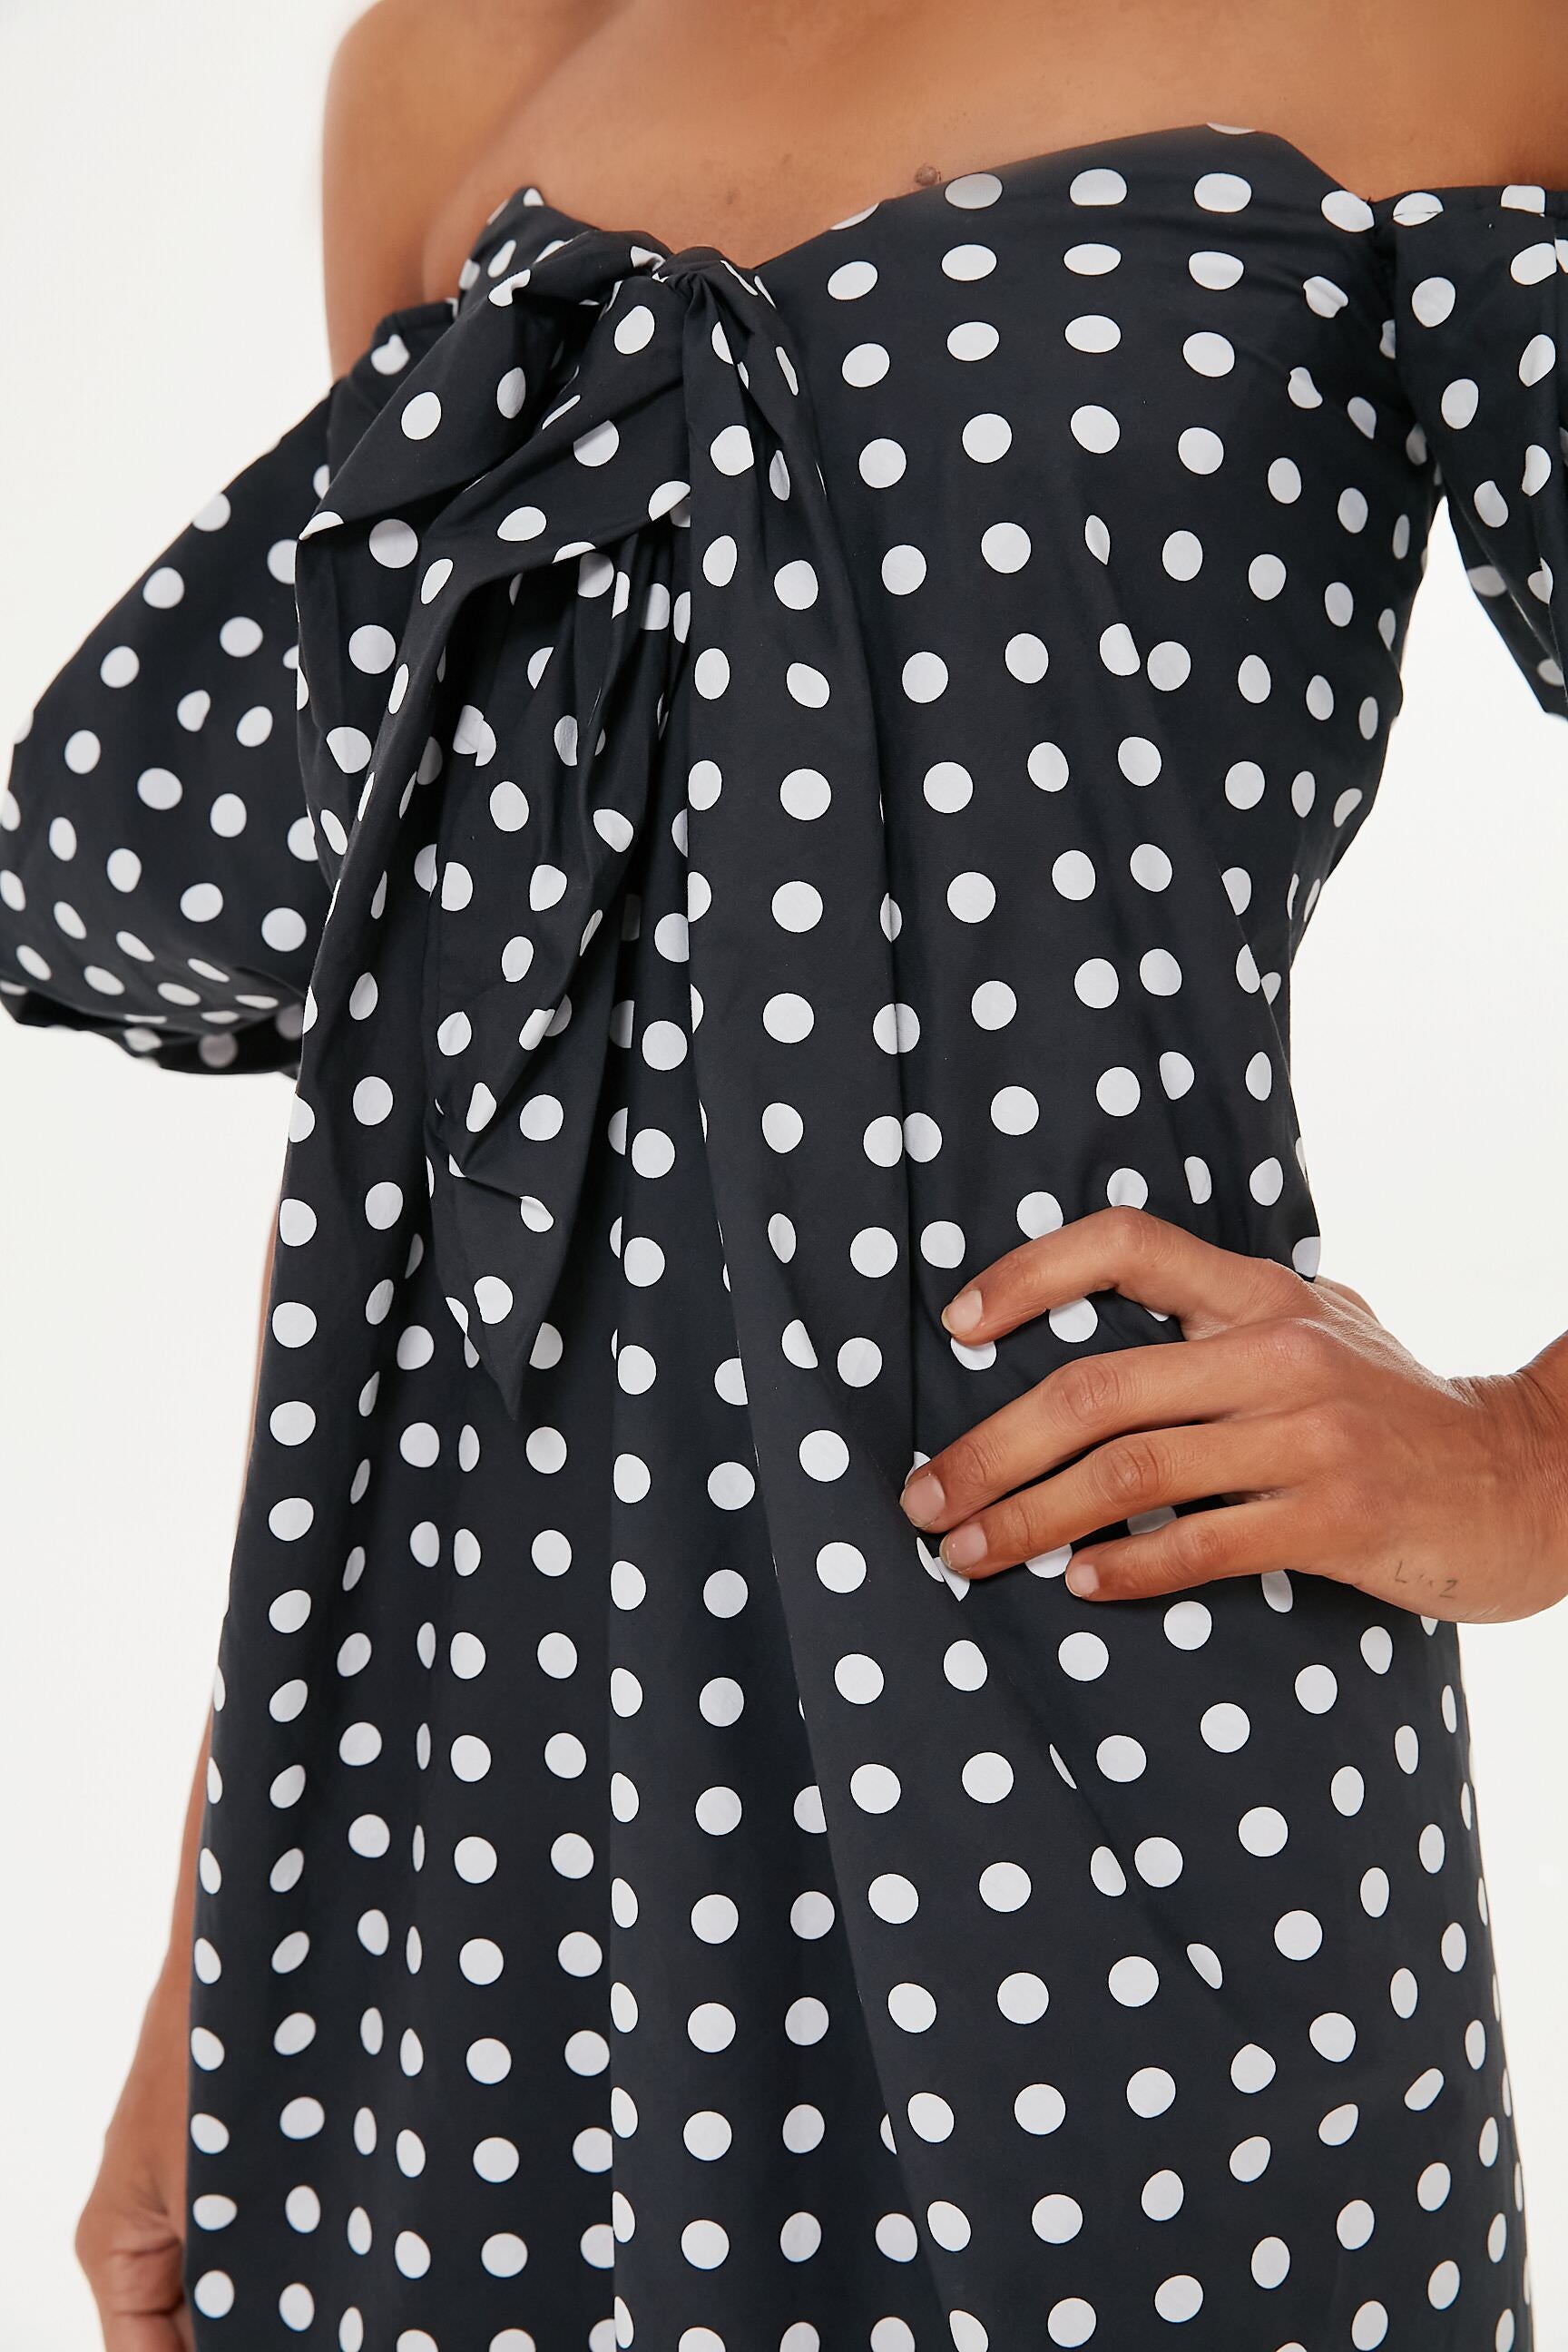 CAROLINE SUITS Women's Elegant Stylish Fashion Polka Dots Design